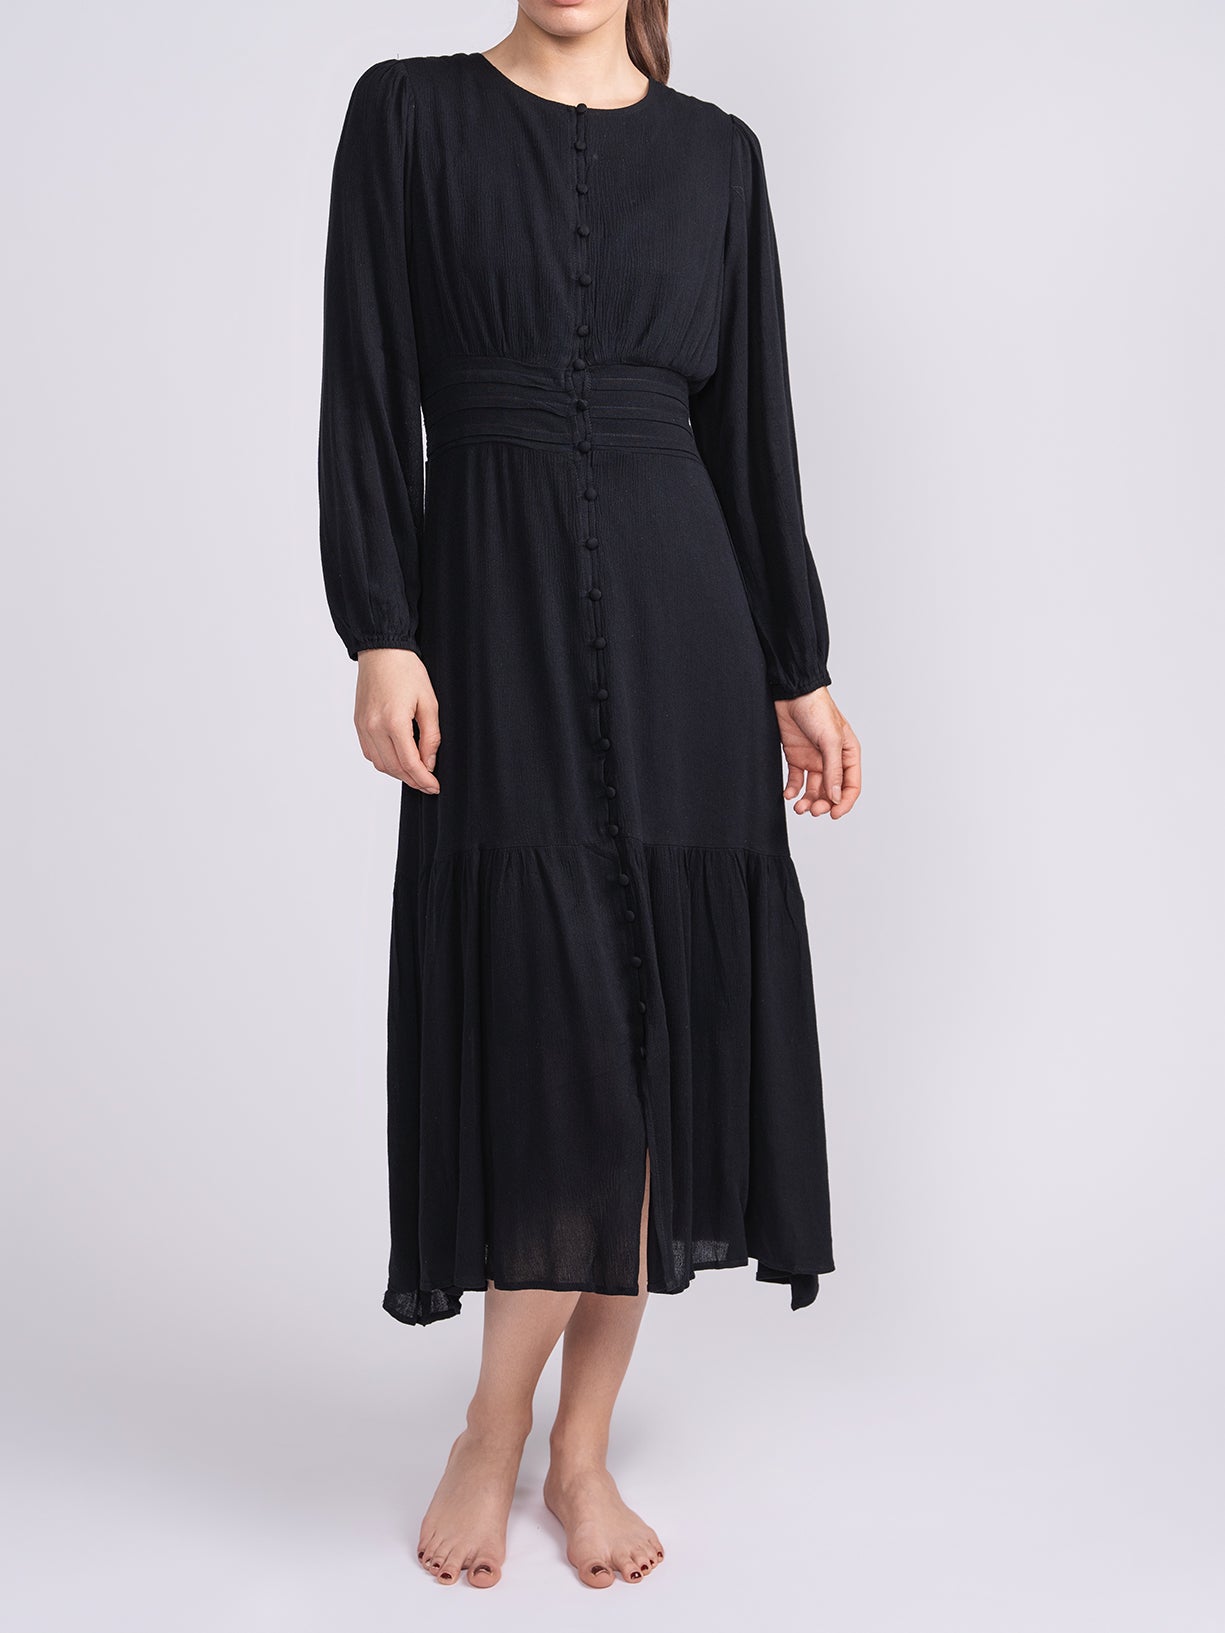 GWENYTH DRESS (JET BLACK)